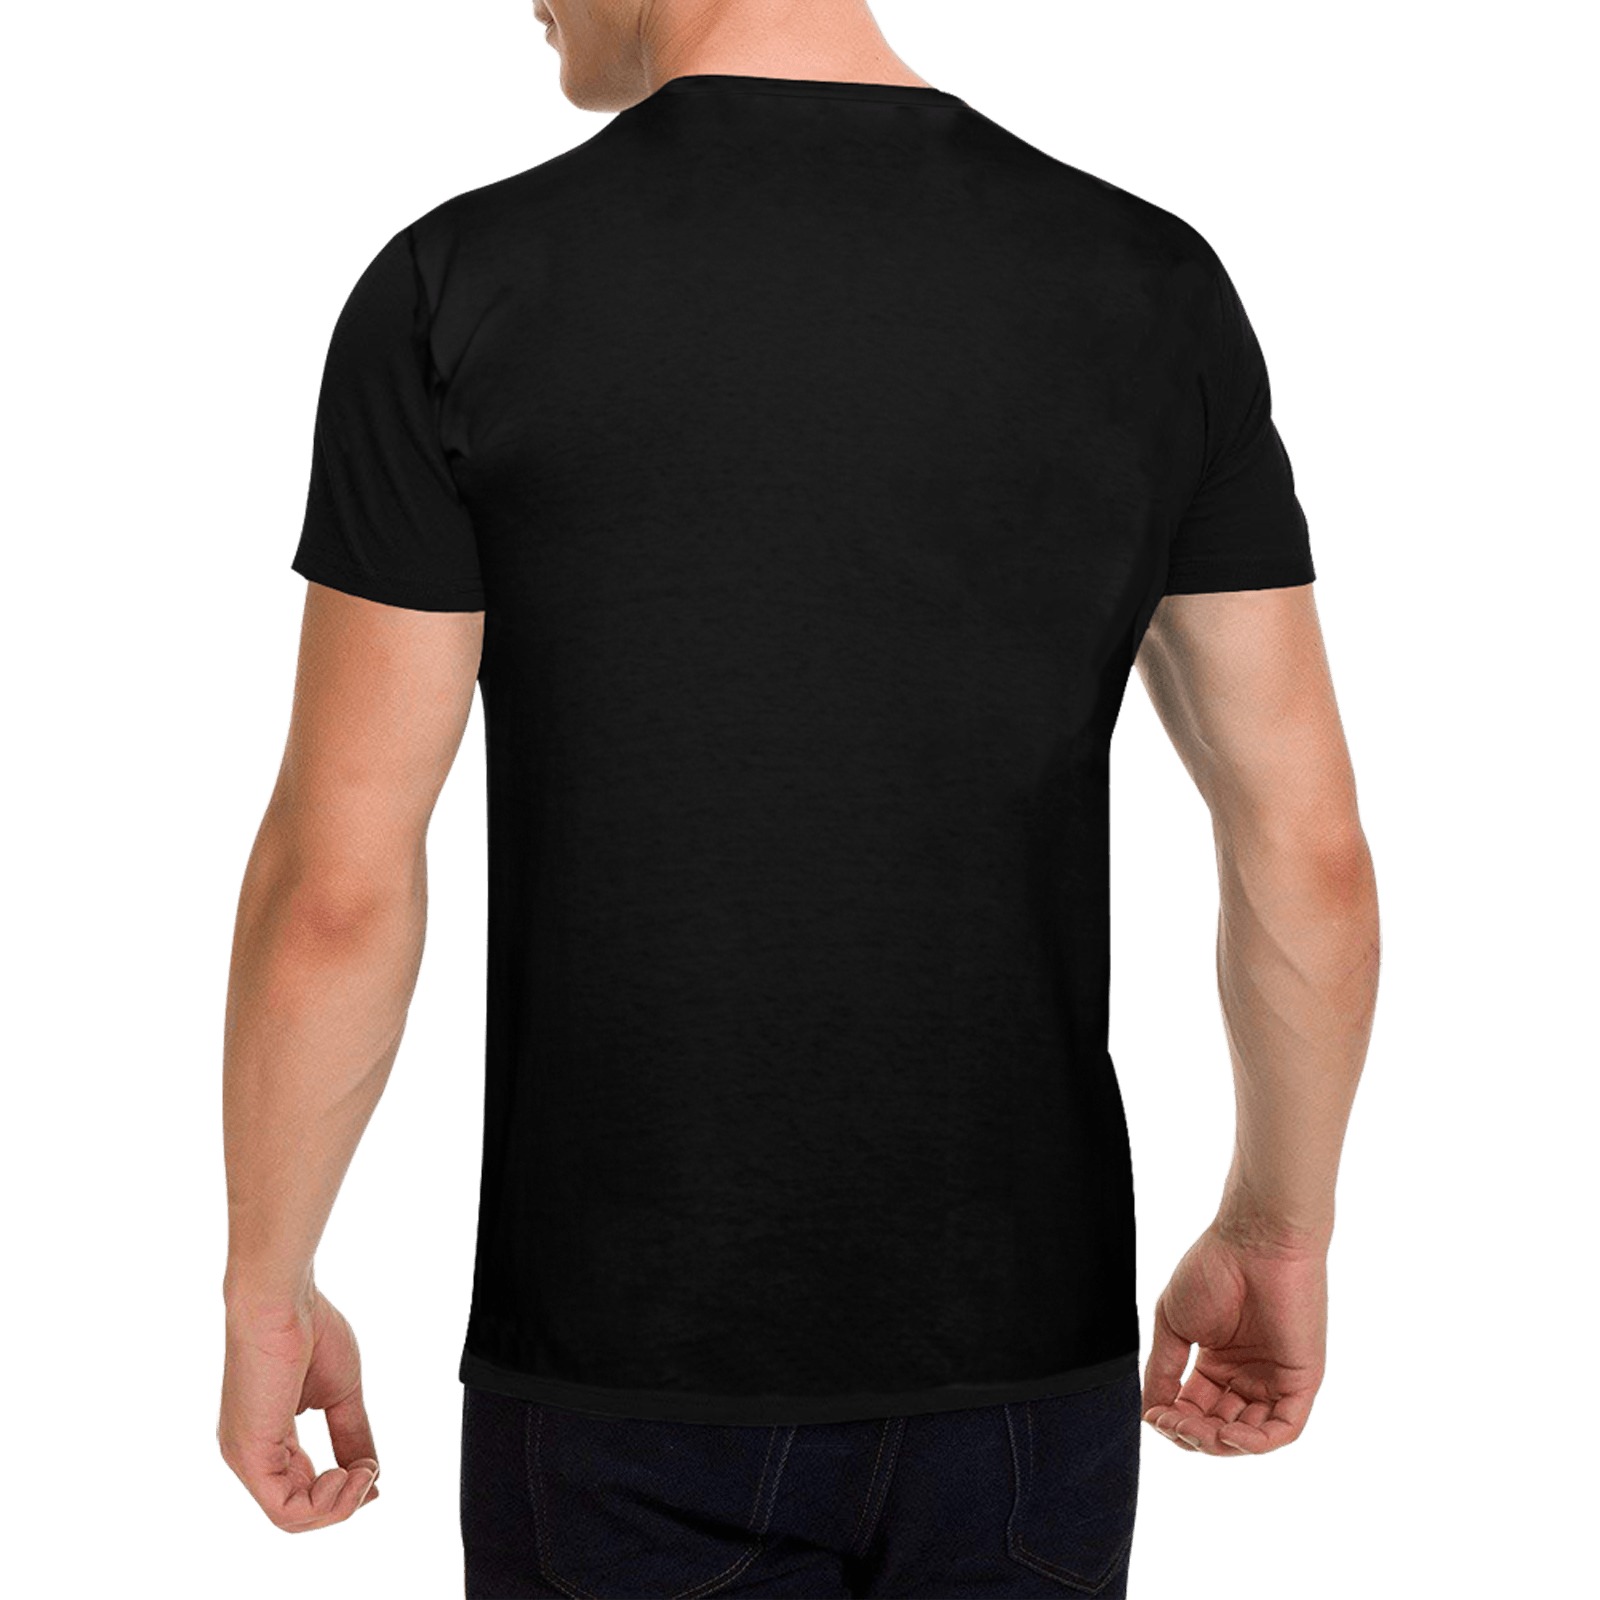 LOSTBOYZINTHEHOOD (4) Men's Heavy Cotton T-Shirt (One Side Printing)